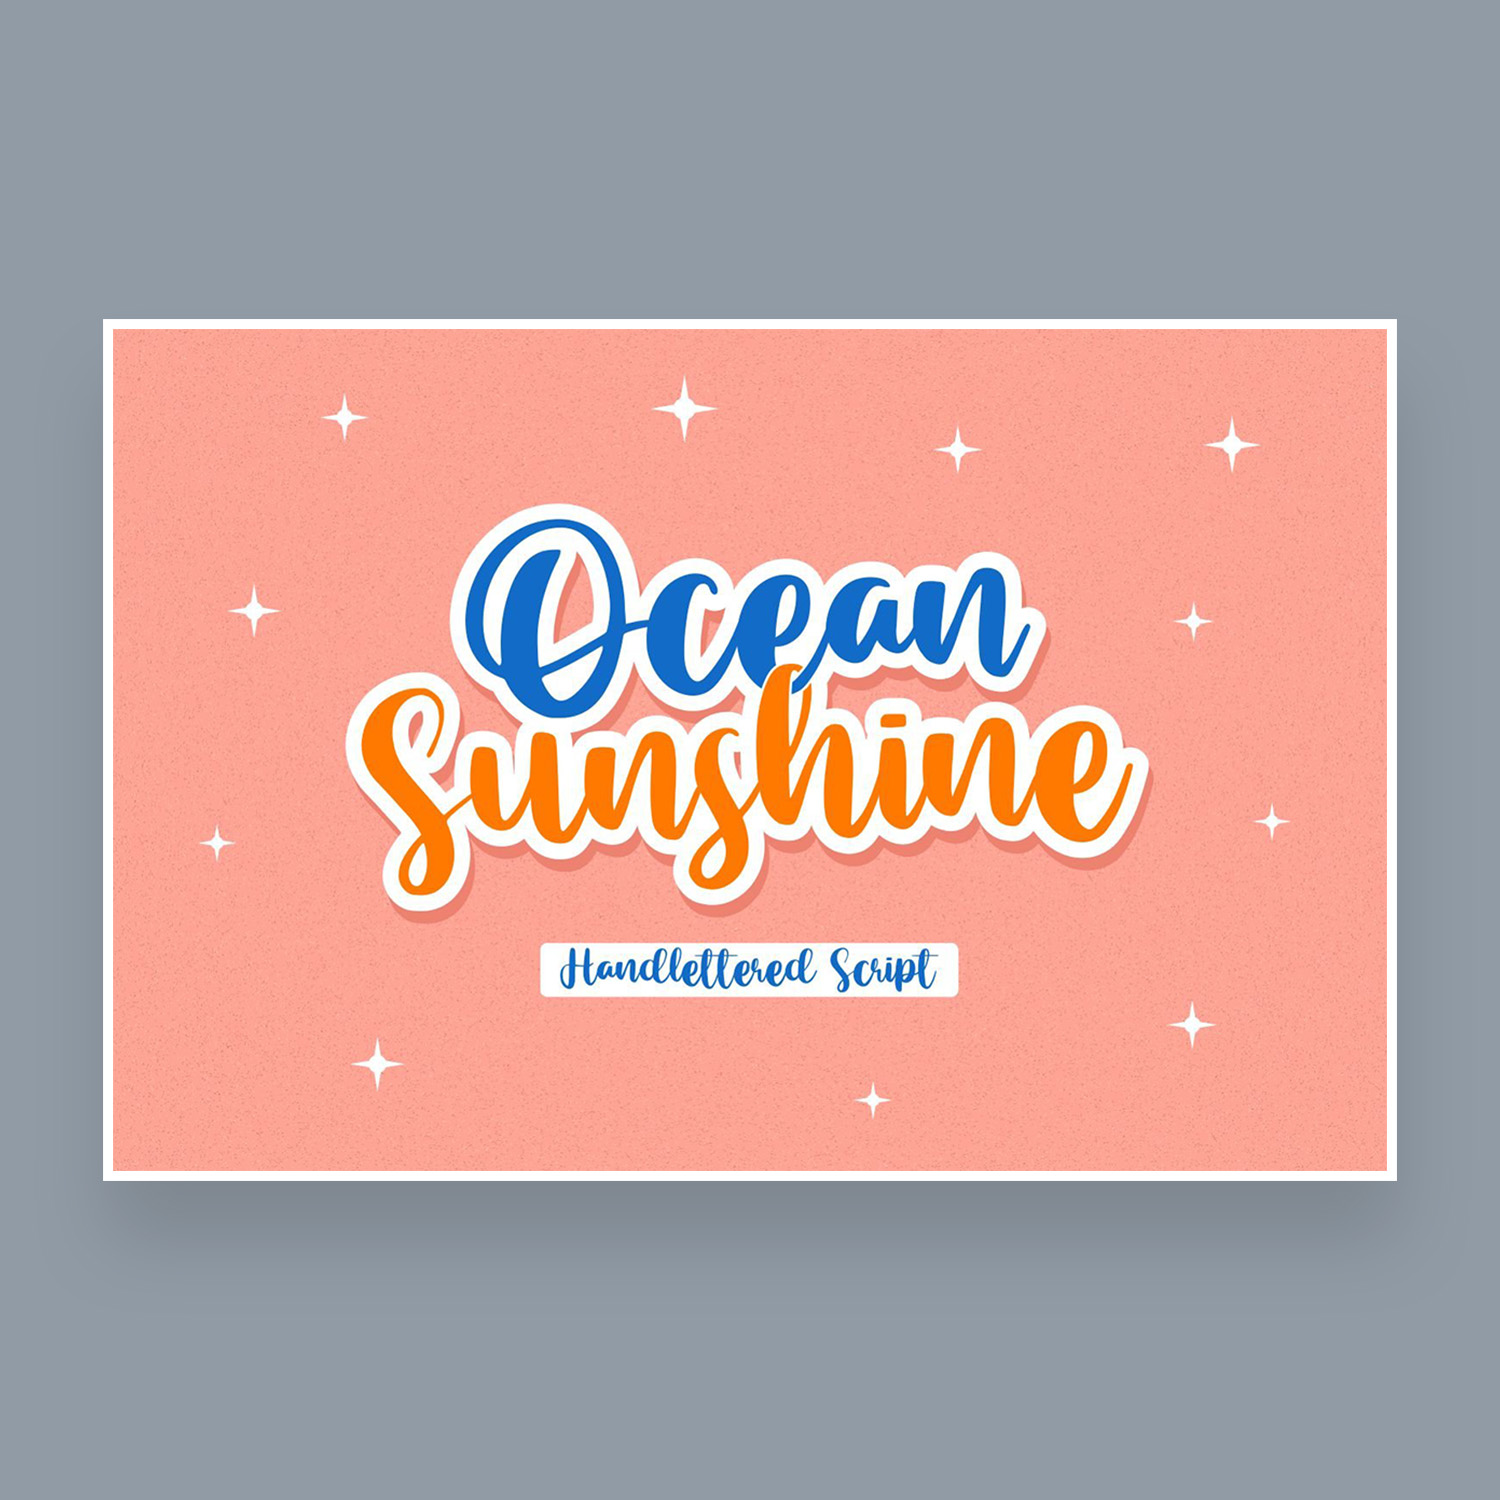 ocean sunshine handlettered script font cover image.